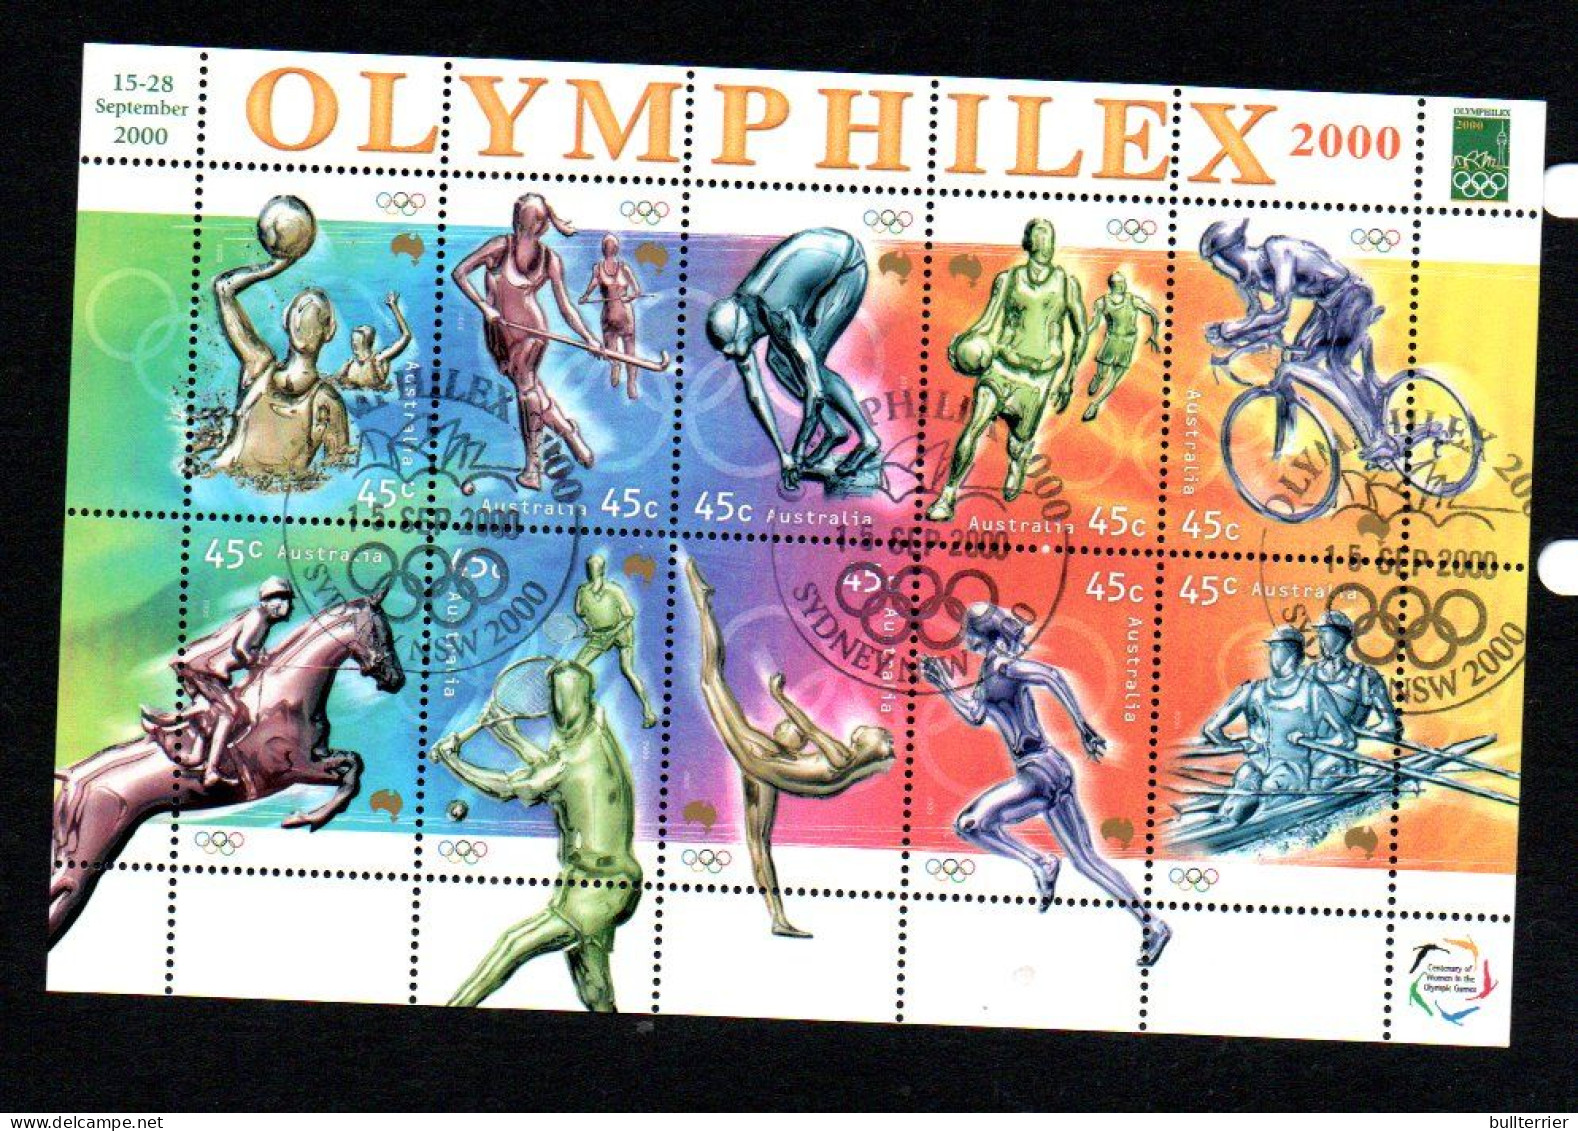 OLYMPICS - AUSTRALIA - 2000 - SYDNEY OLYMPICS /OLYMPHILEX SHEETLET OF 10 FINE USED - Estate 2000: Sydney